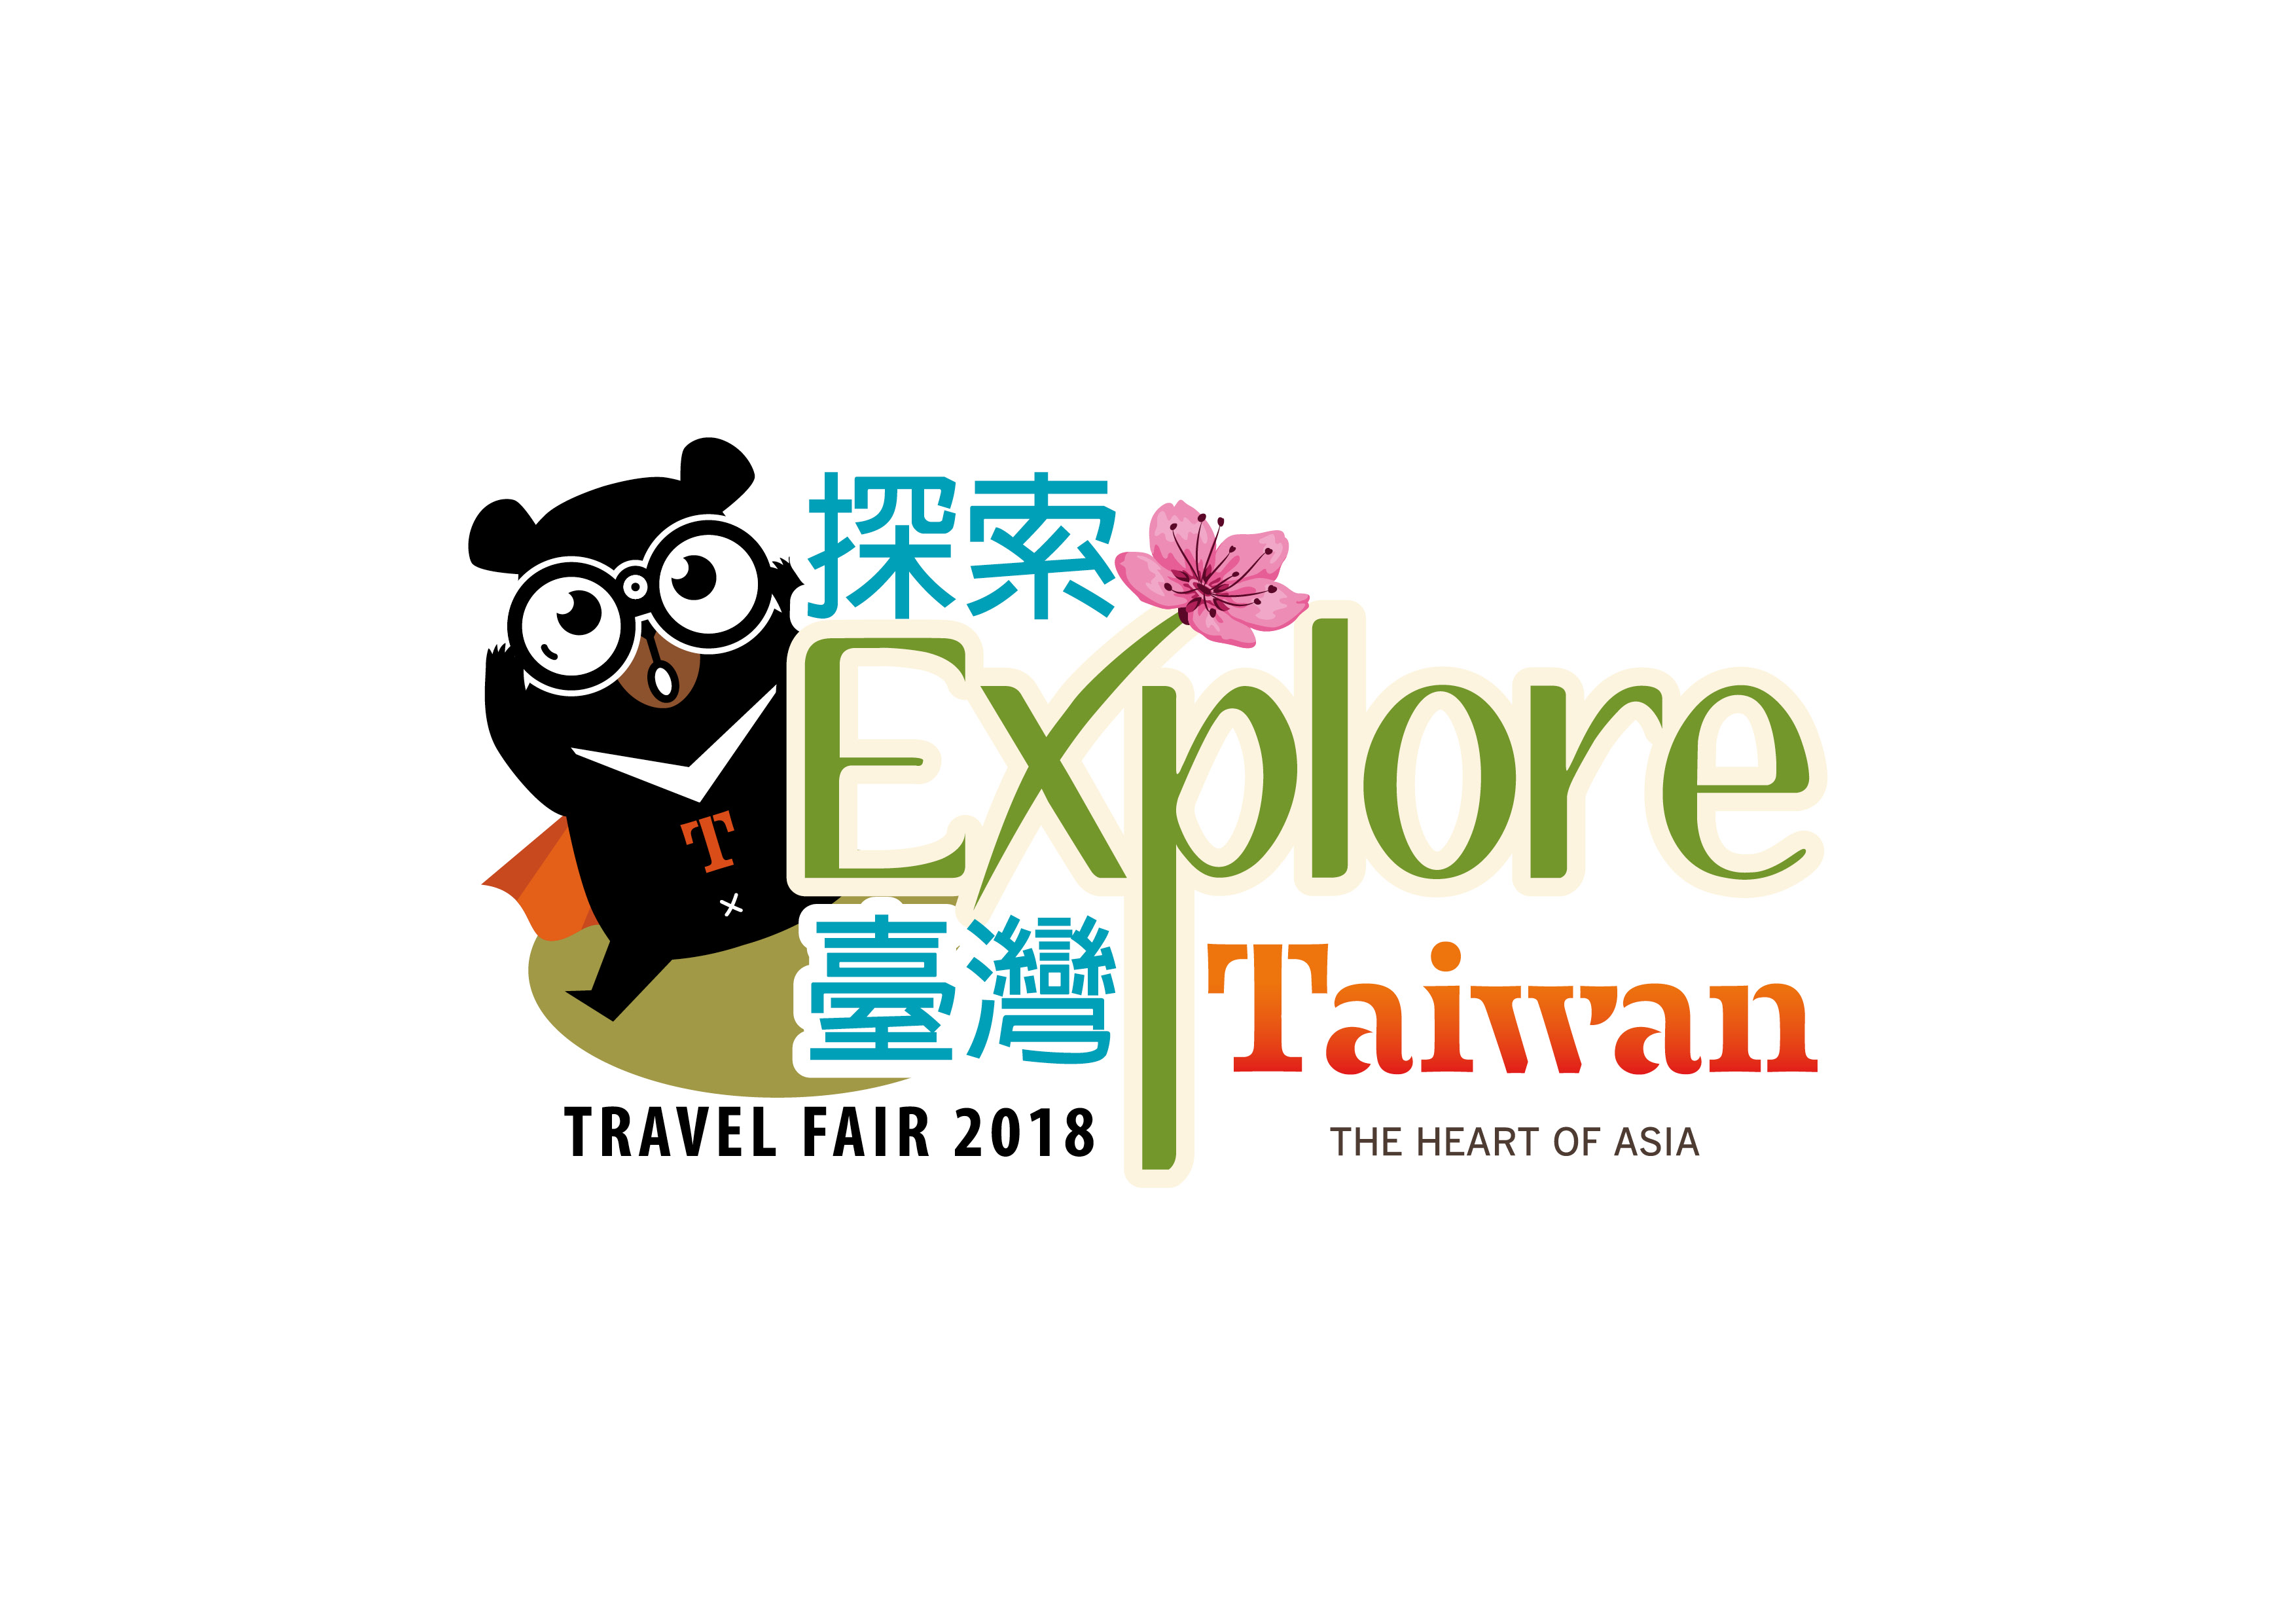 Explore Taiwan Travel Fair 2018